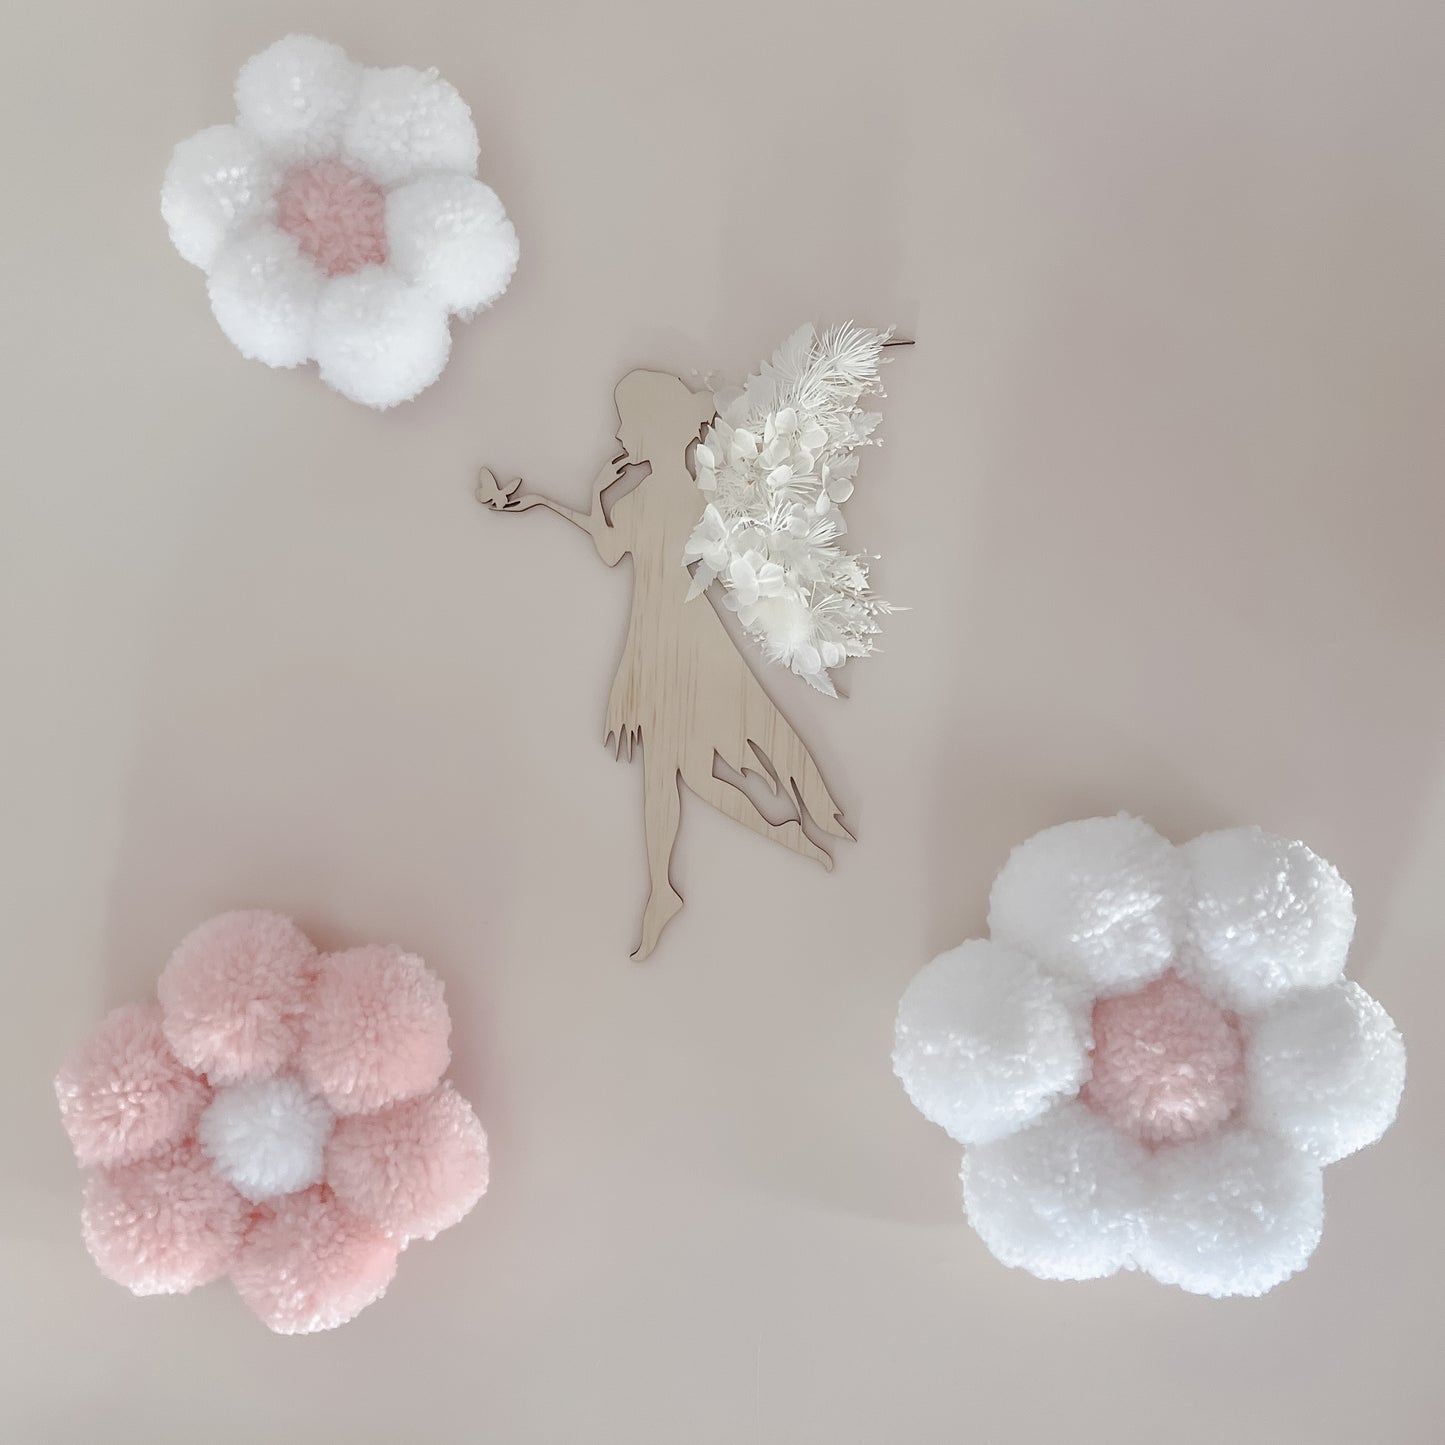 Wooden Fairy w/ dried flowers